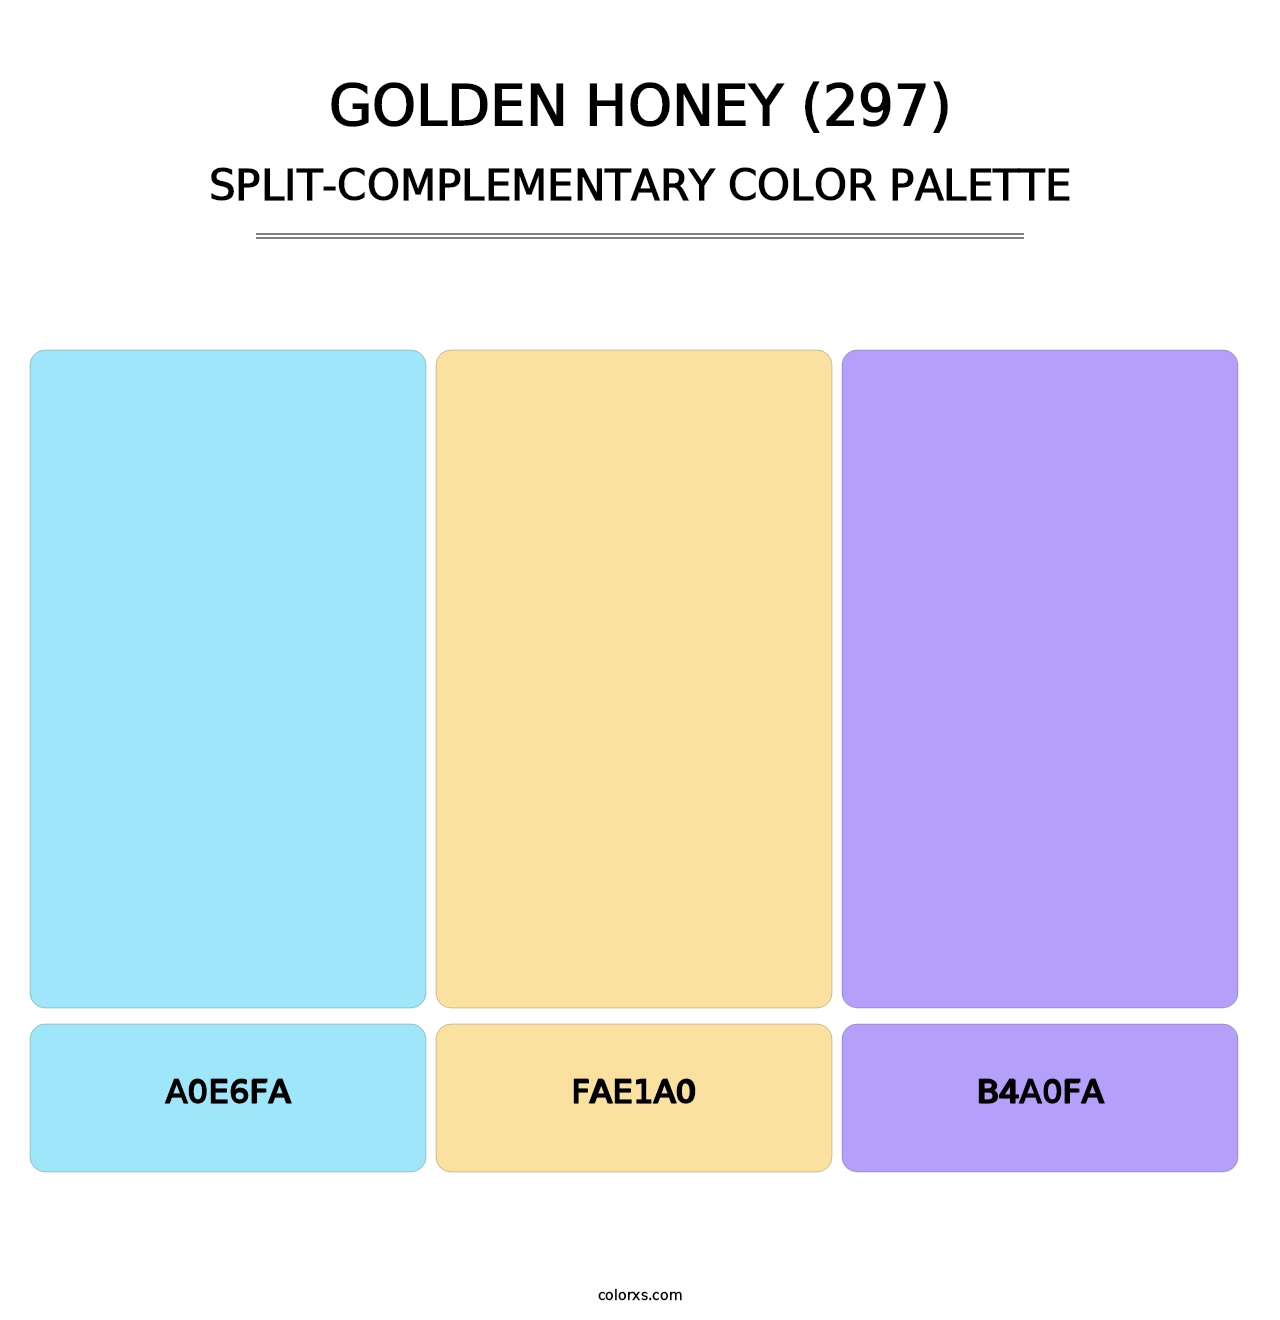 Golden Honey (297) - Split-Complementary Color Palette